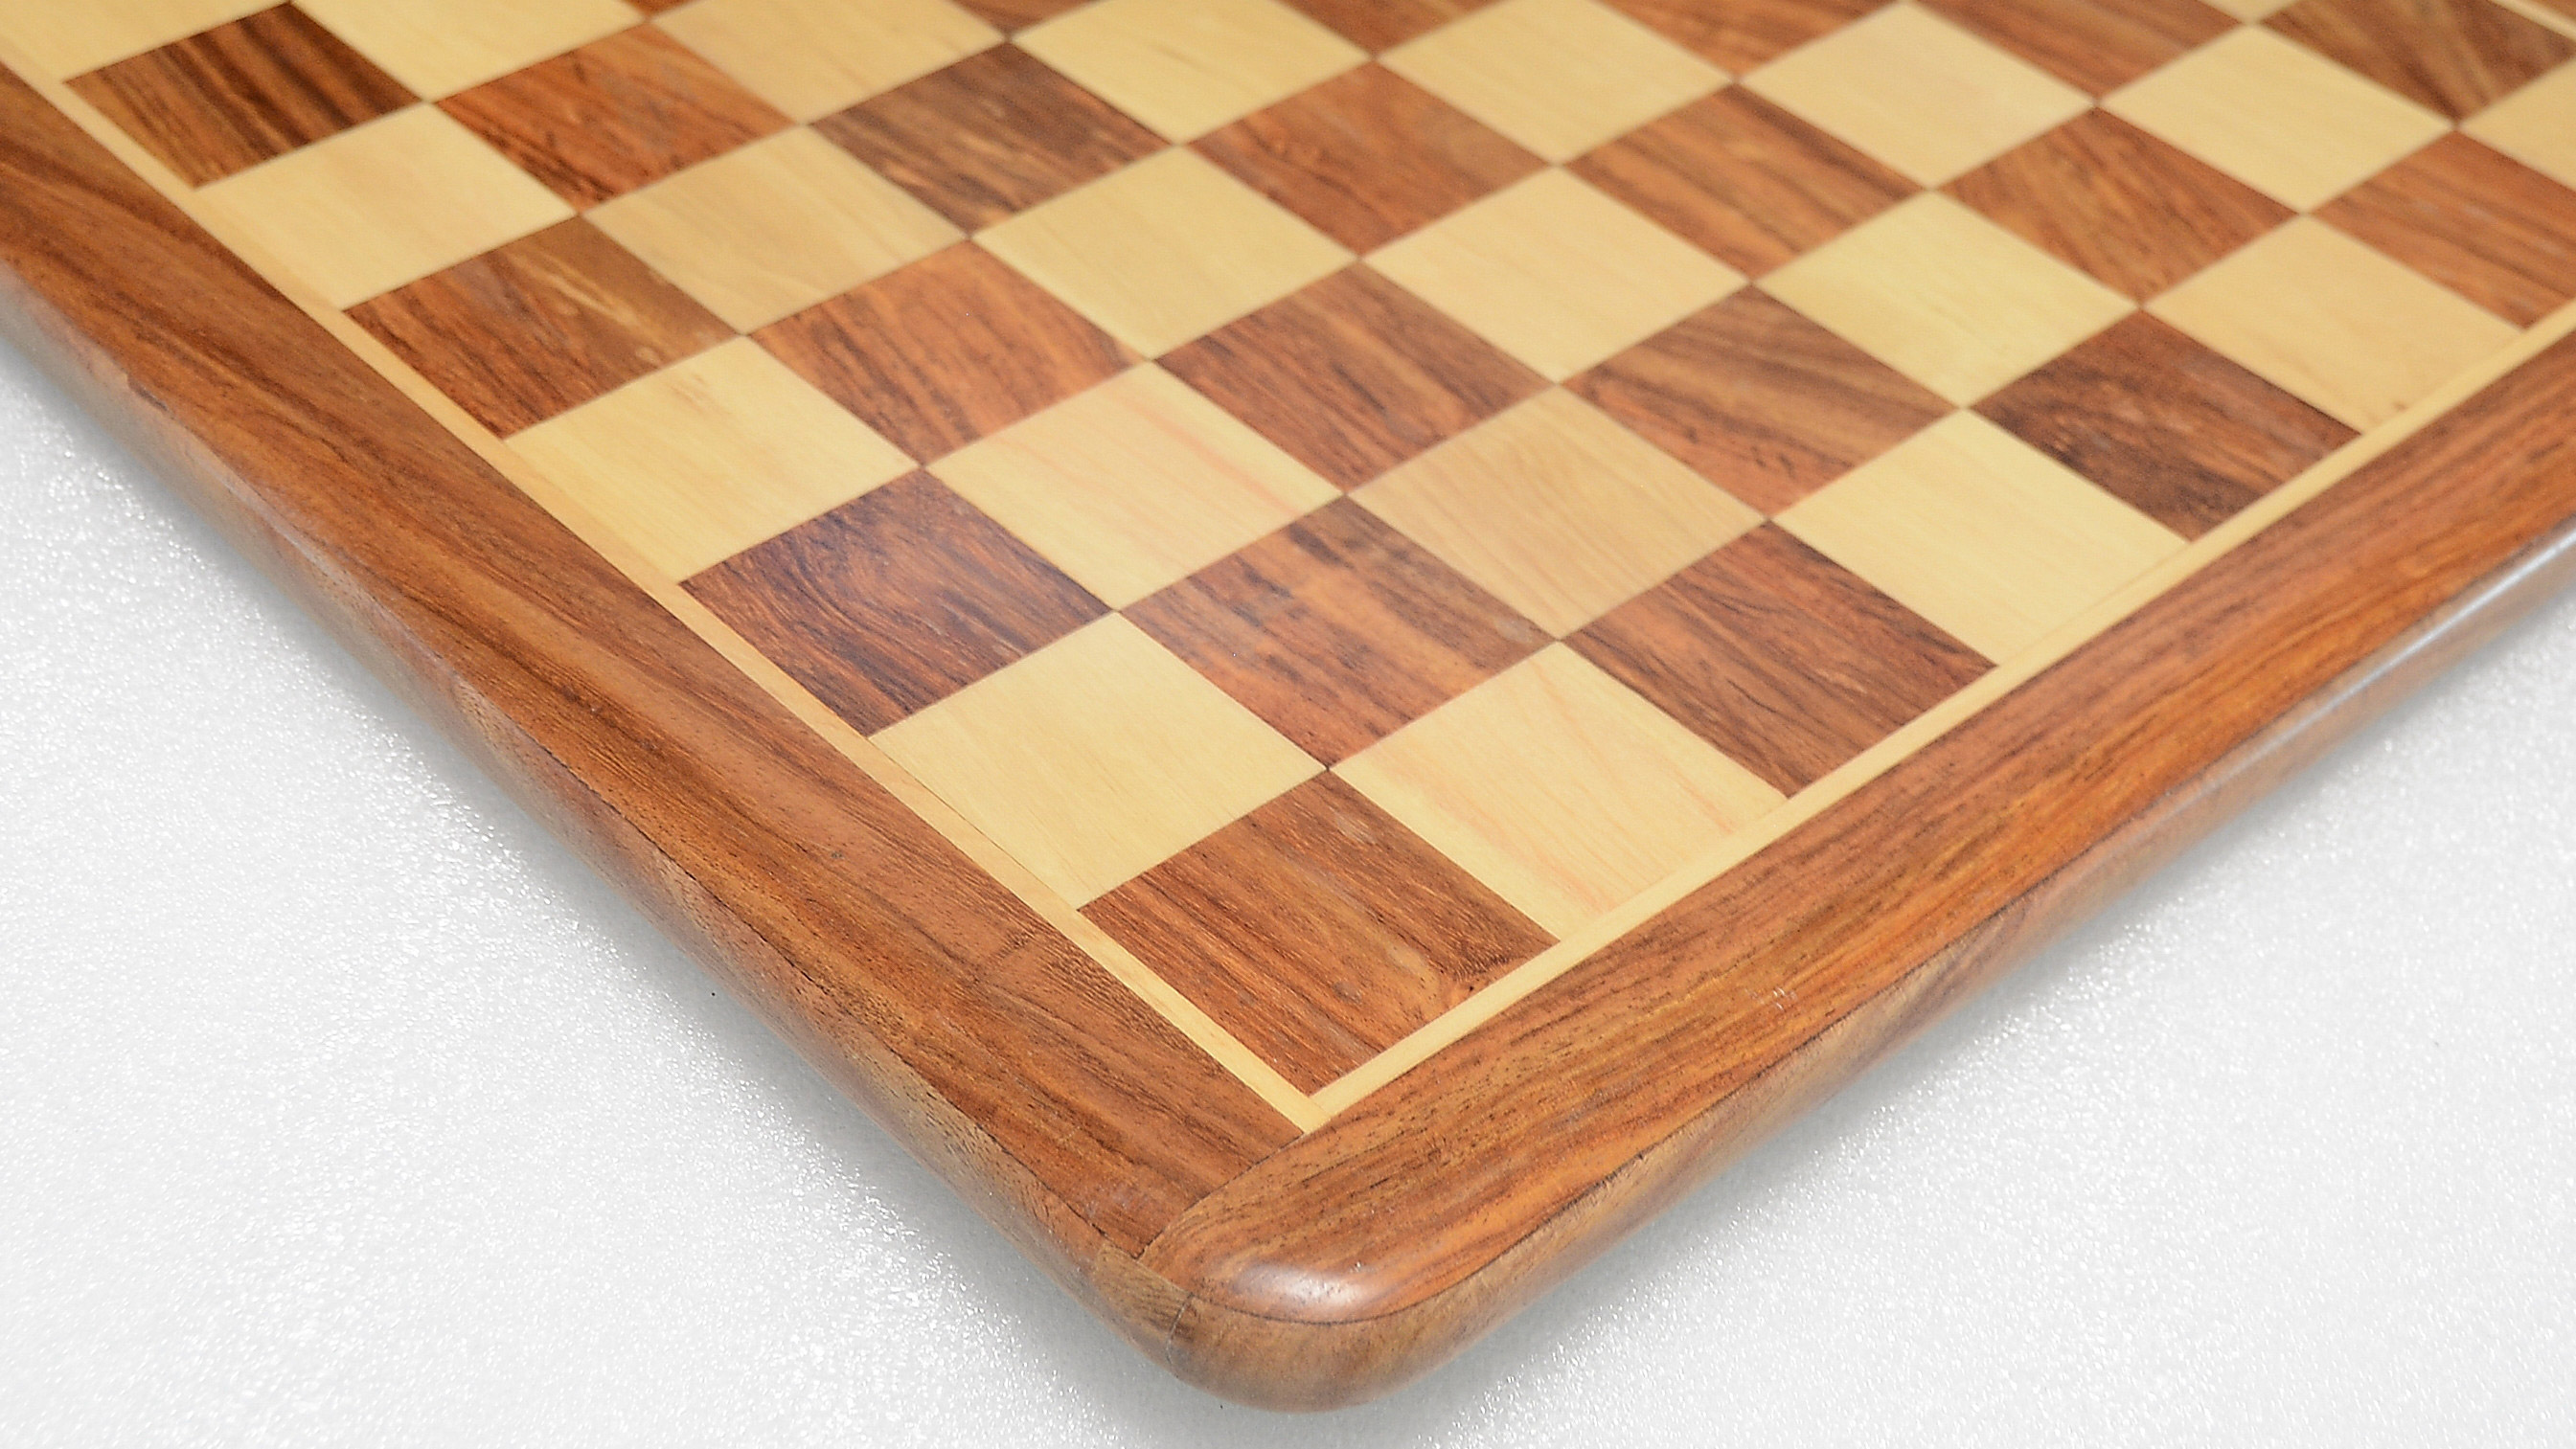  Chess Board Wooden Sheesham Golden Brown Wood 17